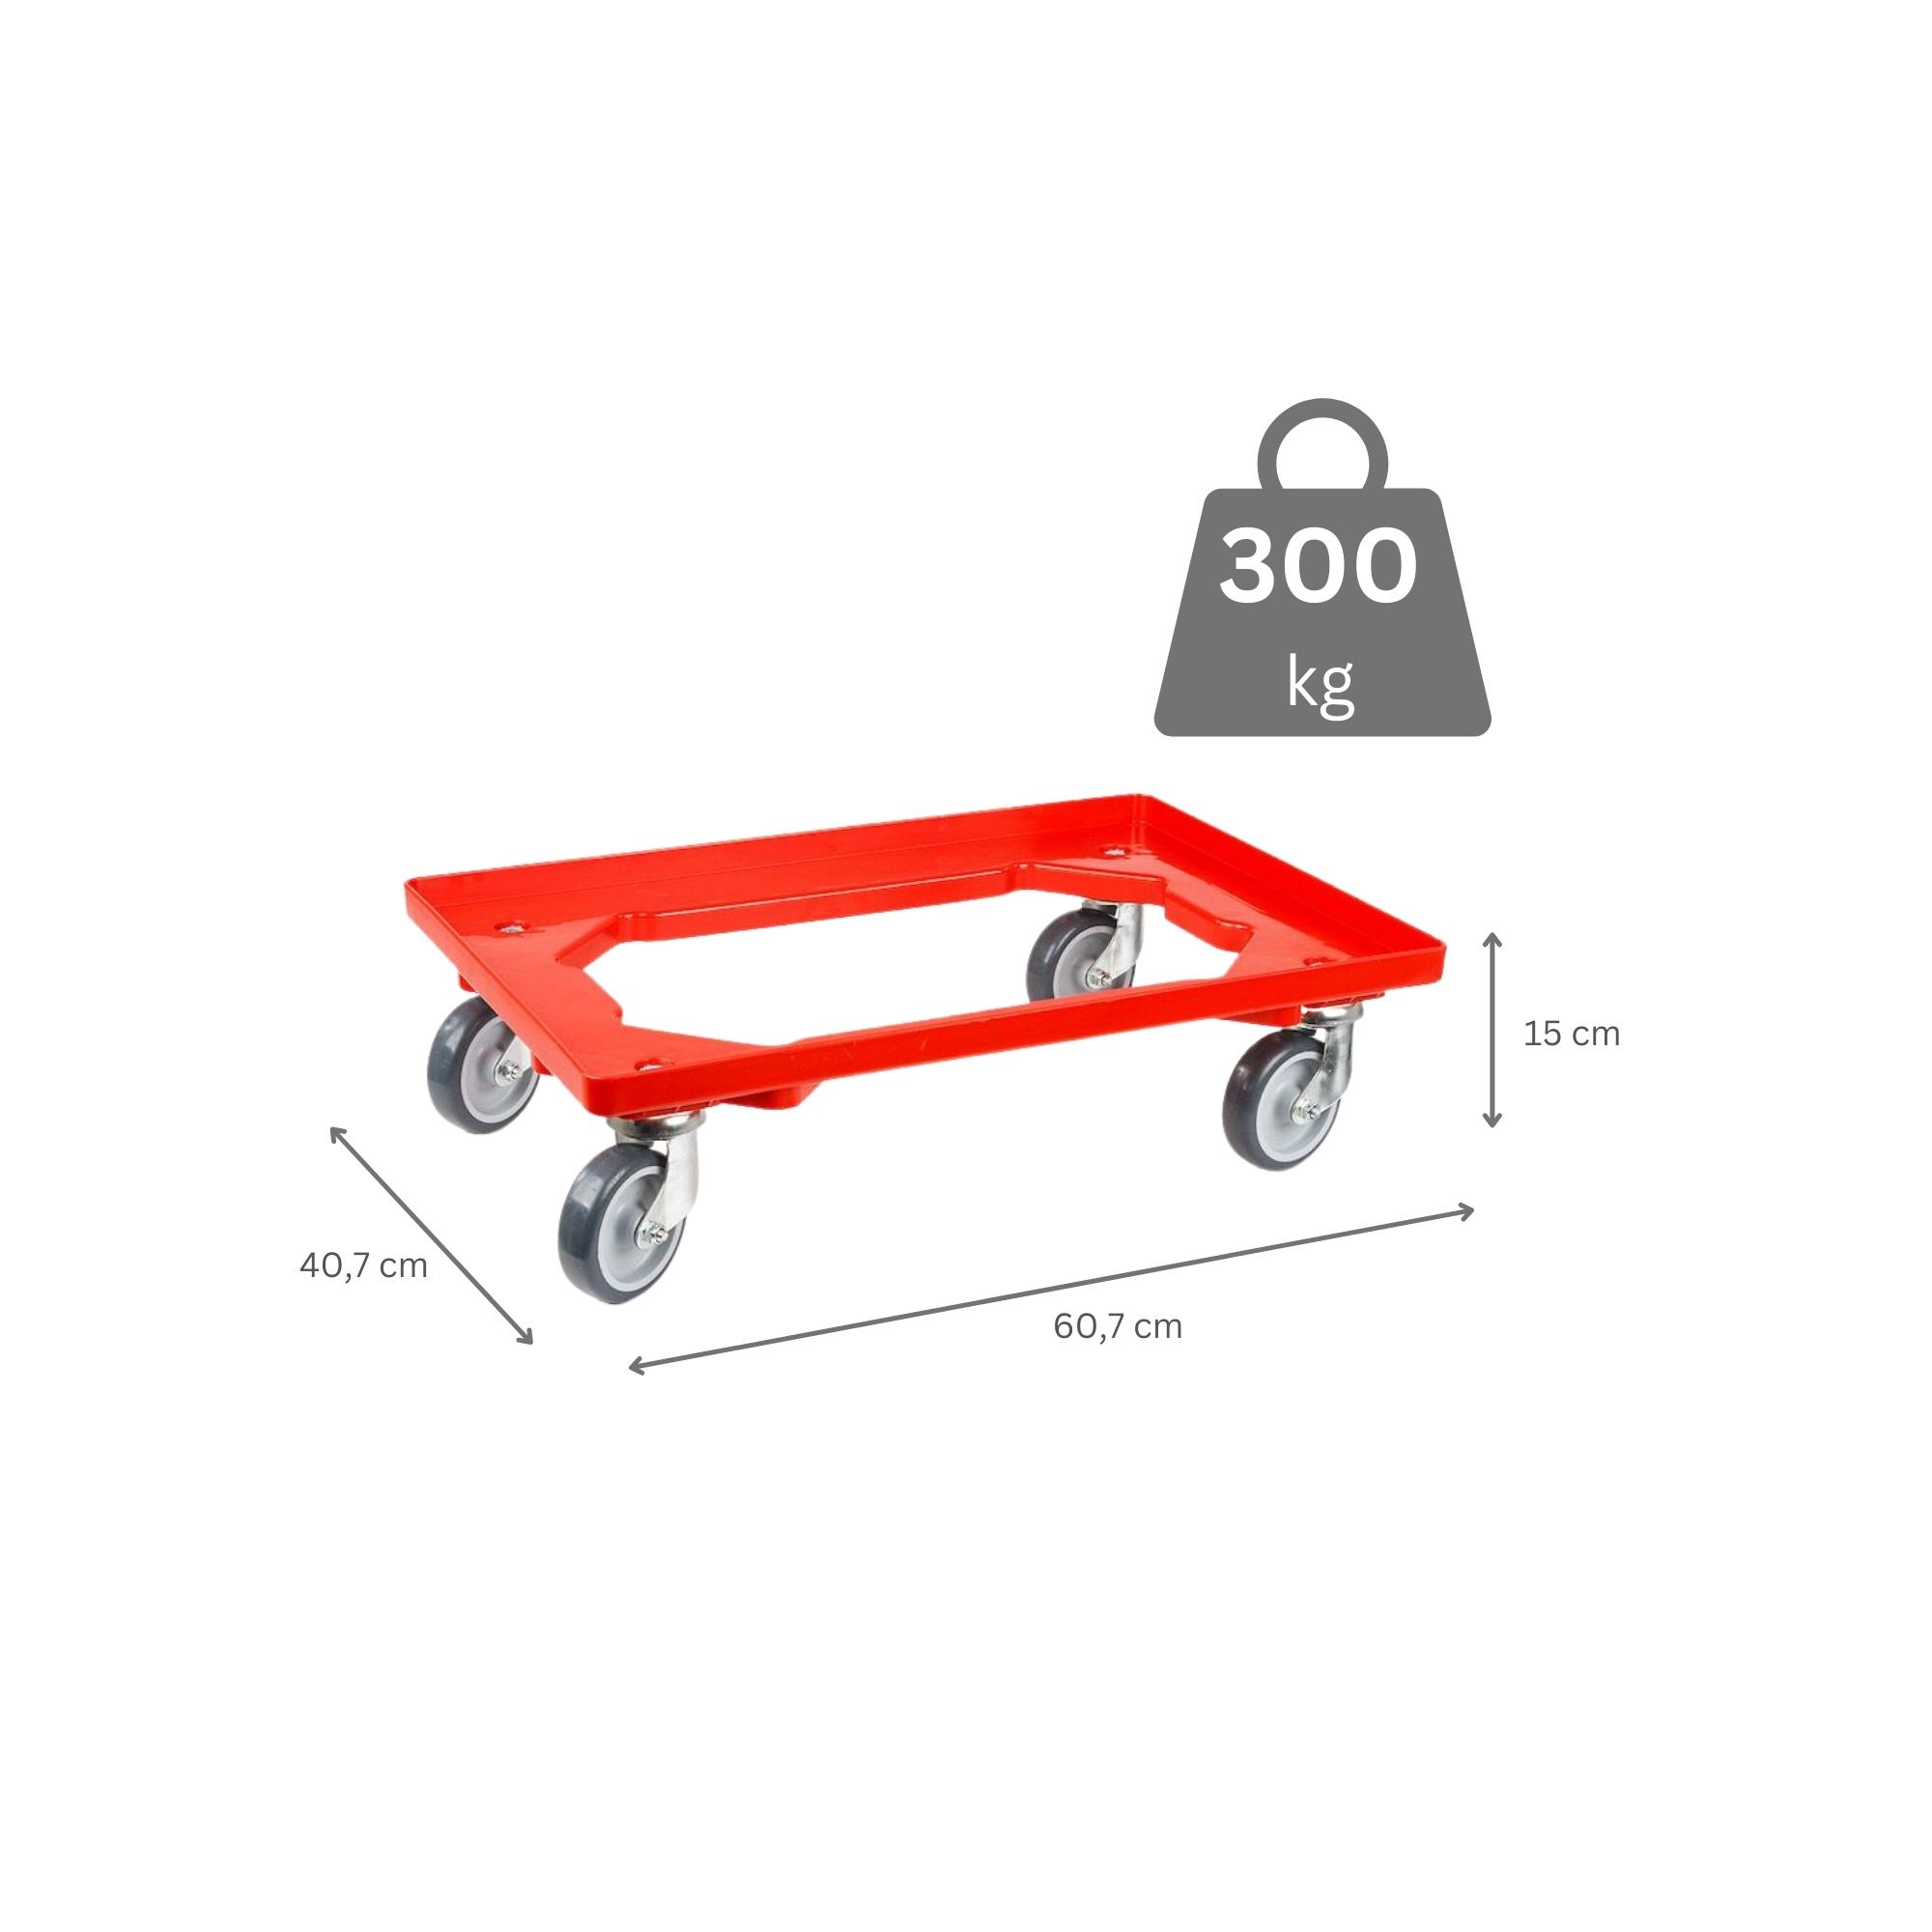 SparSet 10x Transportroller für Euroboxen 60x40cm mit Gummiräder rot | Offenes Deck | 2 Lenkrollen & 2 Bockrollen | Traglast 300kg | Kistenroller Logistikroller Rollwagen Profi-Fahrgestell